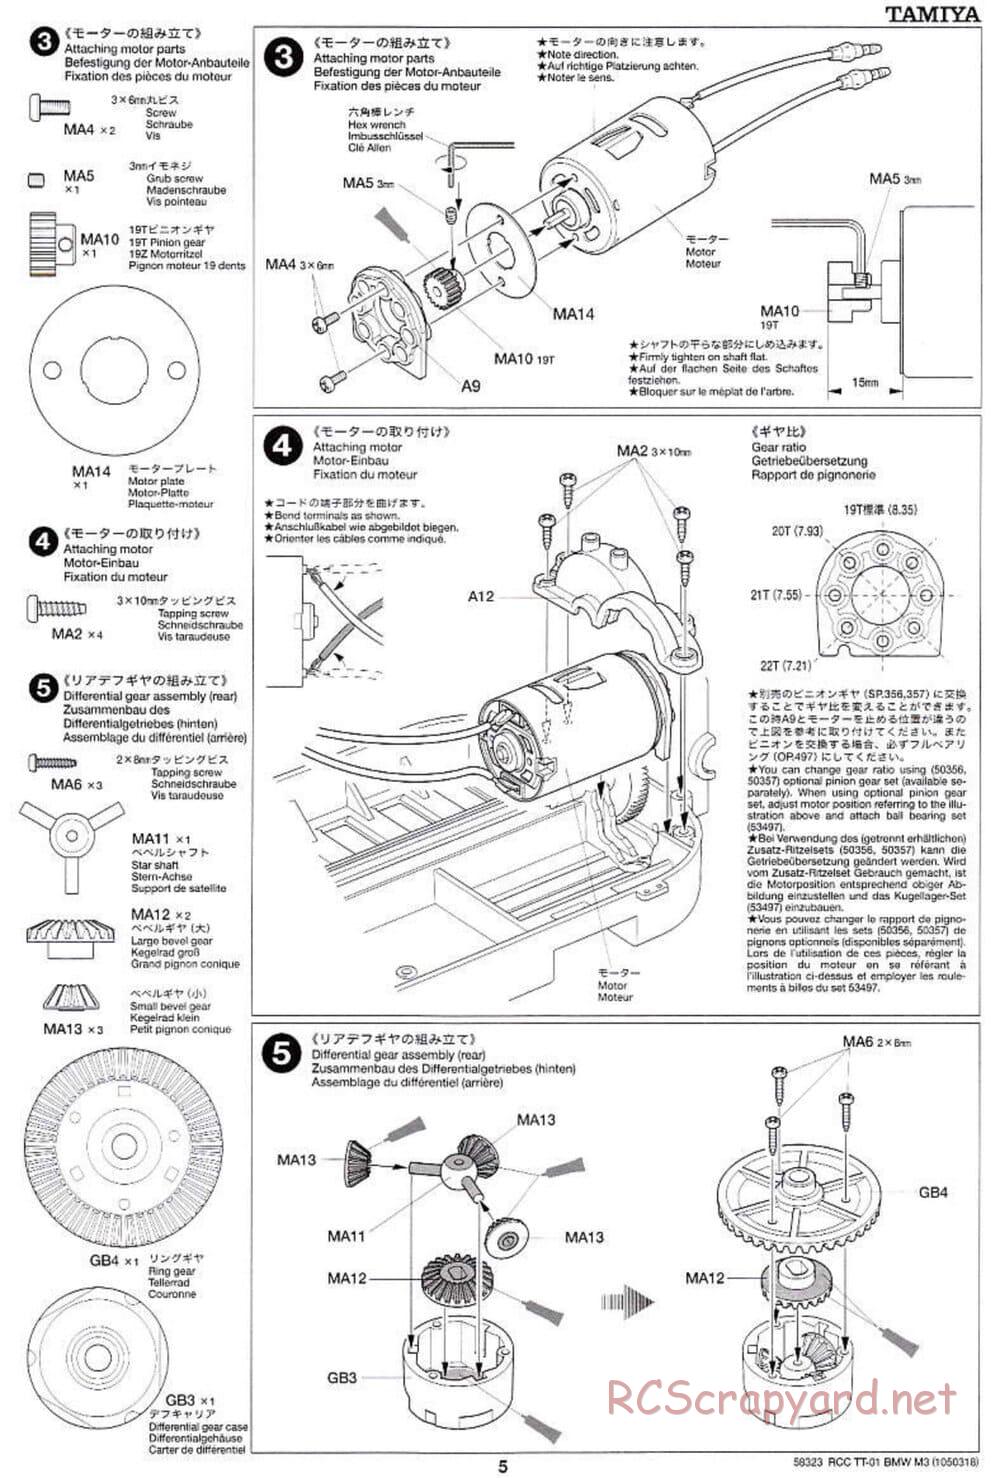 Tamiya - Schnitzer BMW M3 Sport Evo - TT-01 Chassis - Manual - Page 5